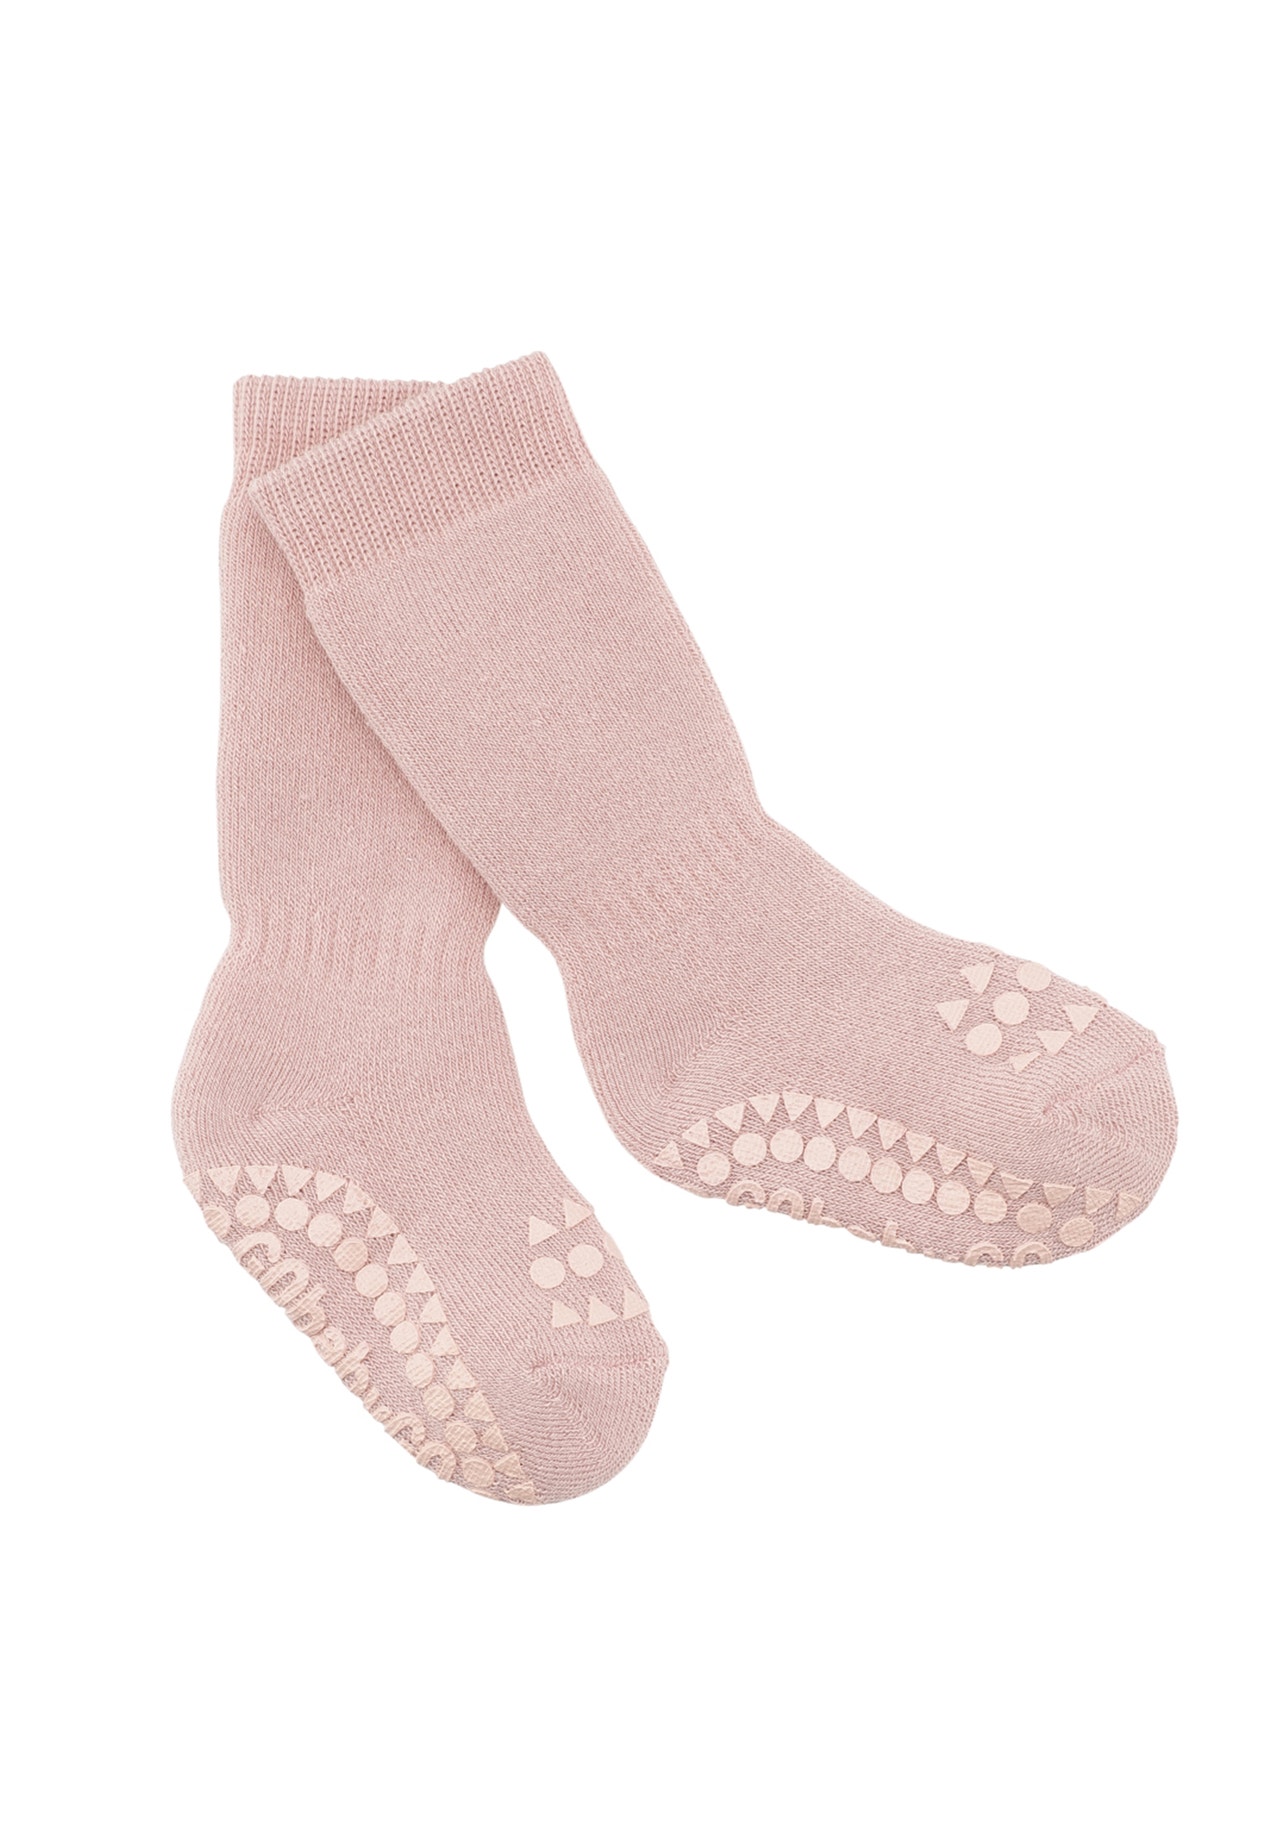 MAMA.LICIOUS Gobabygo non-slip socks -Dusty Rose - 33333336